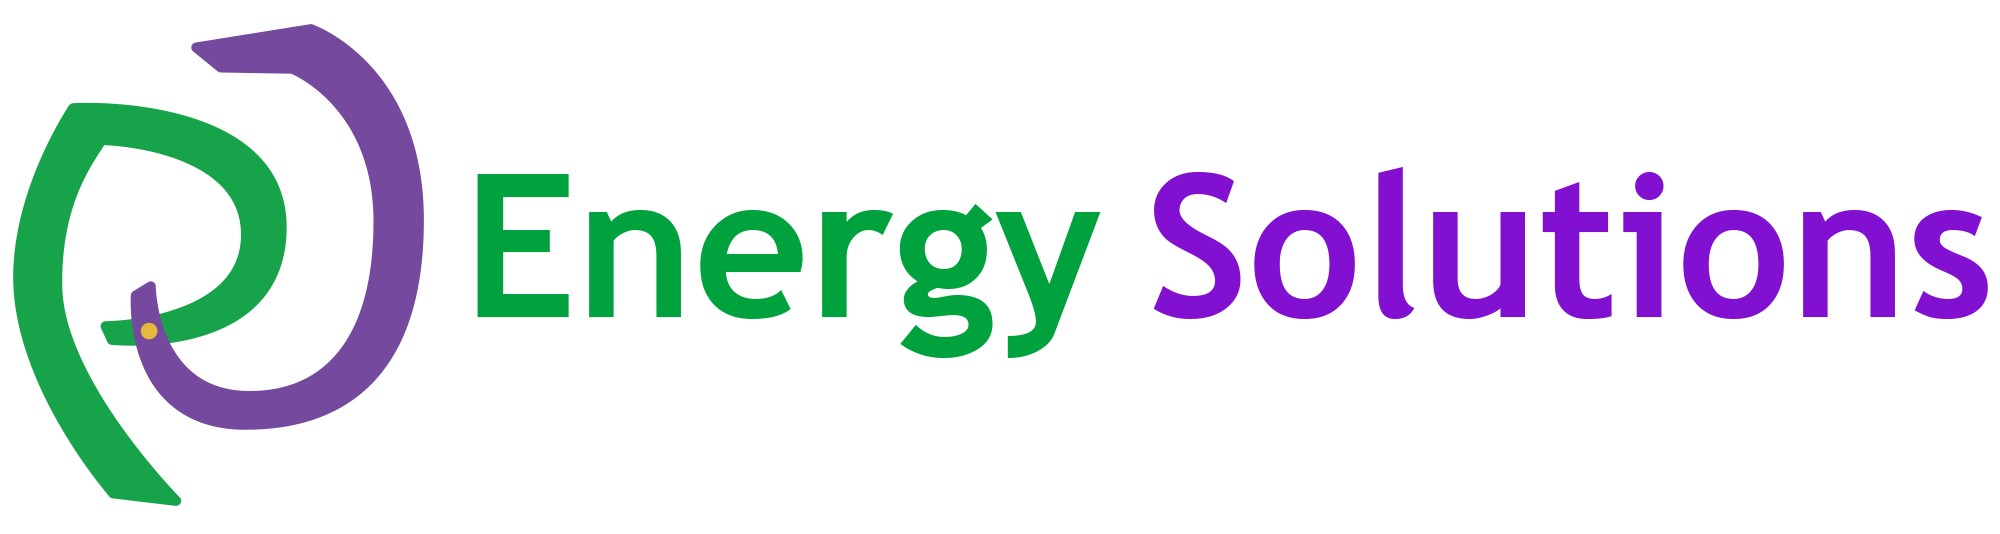 PJ Energy Solutions logo